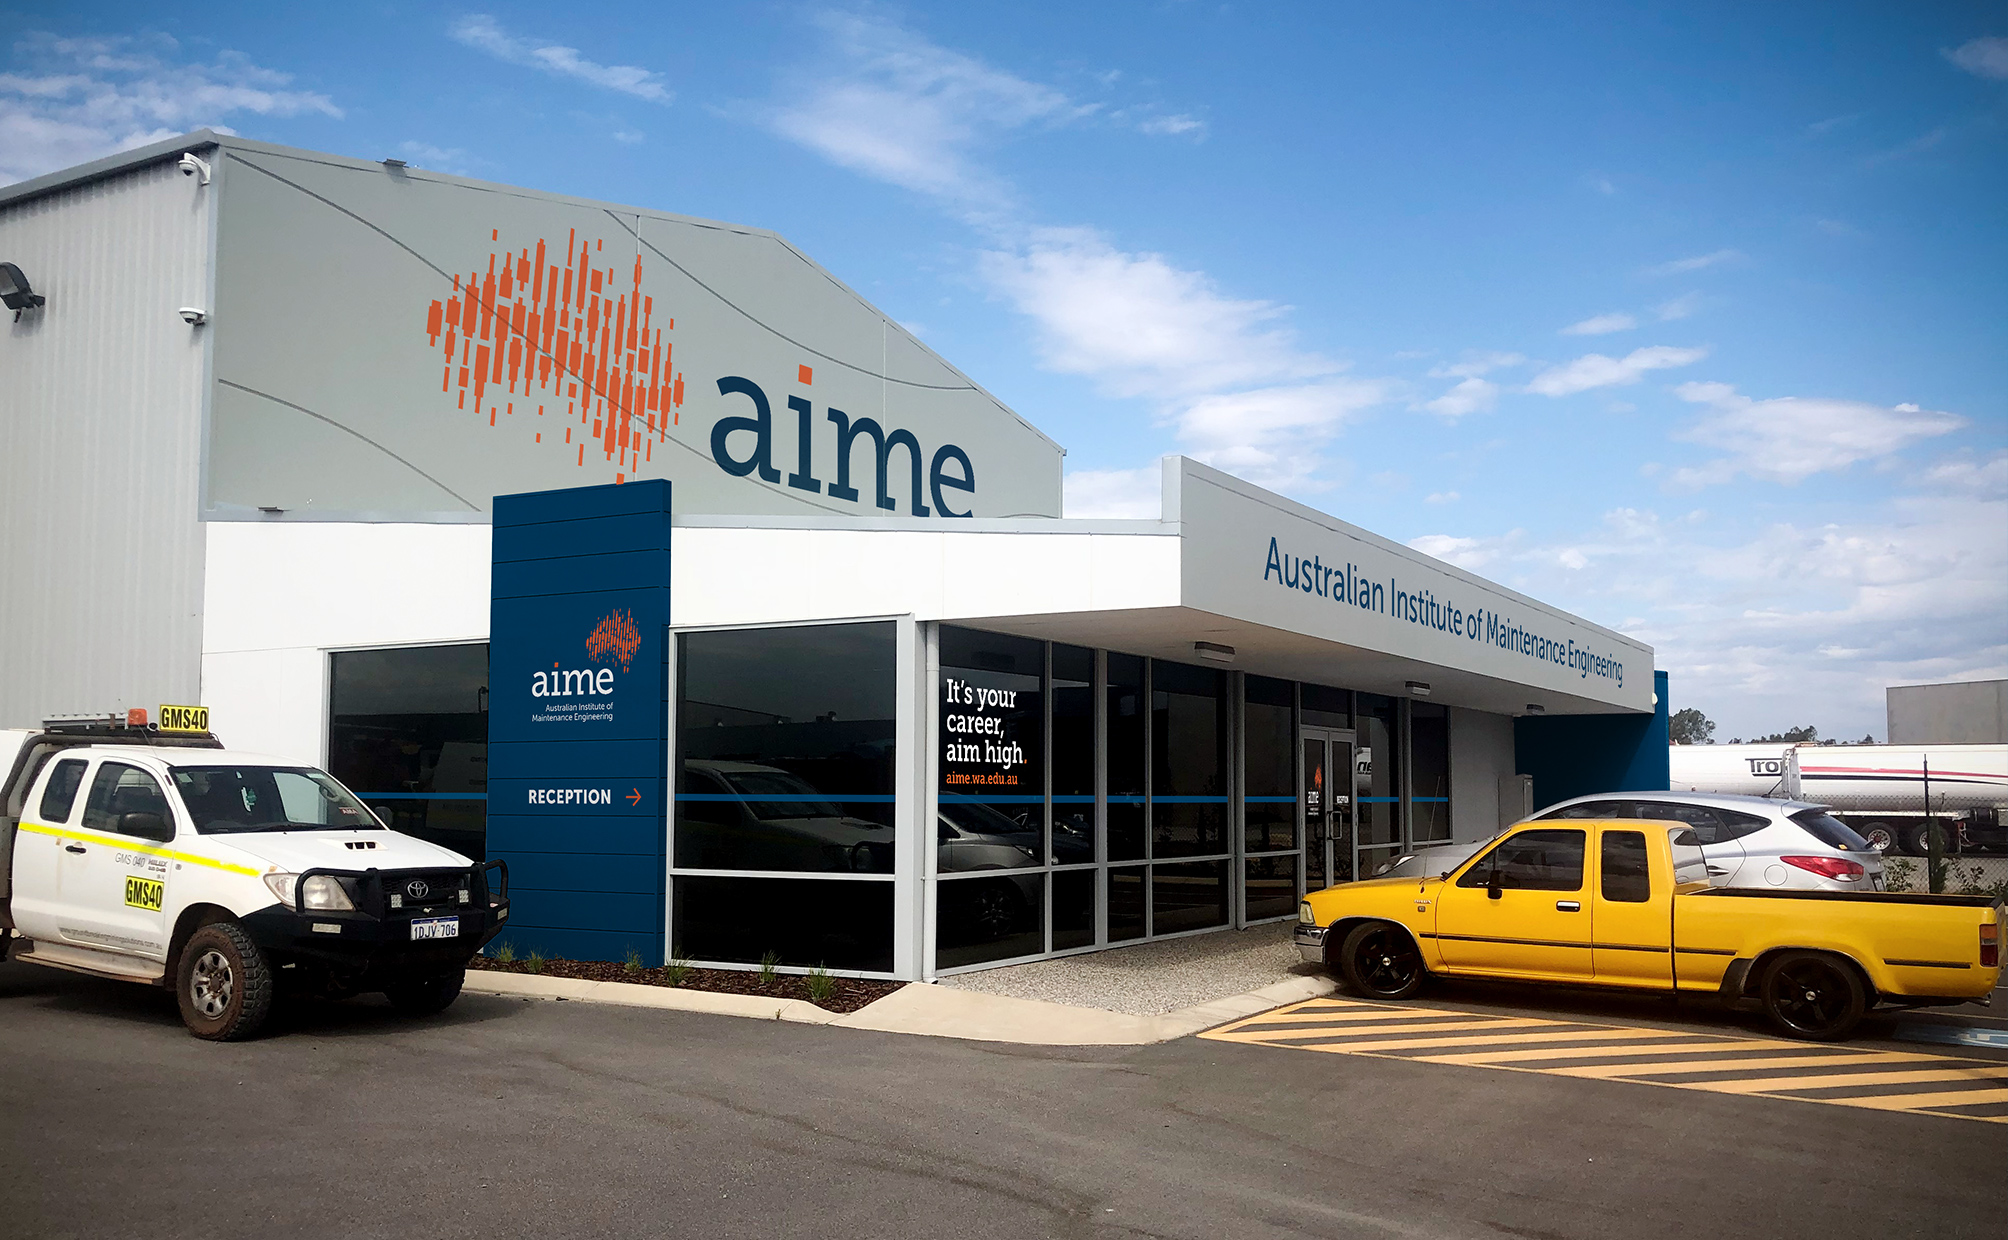 The AIME building